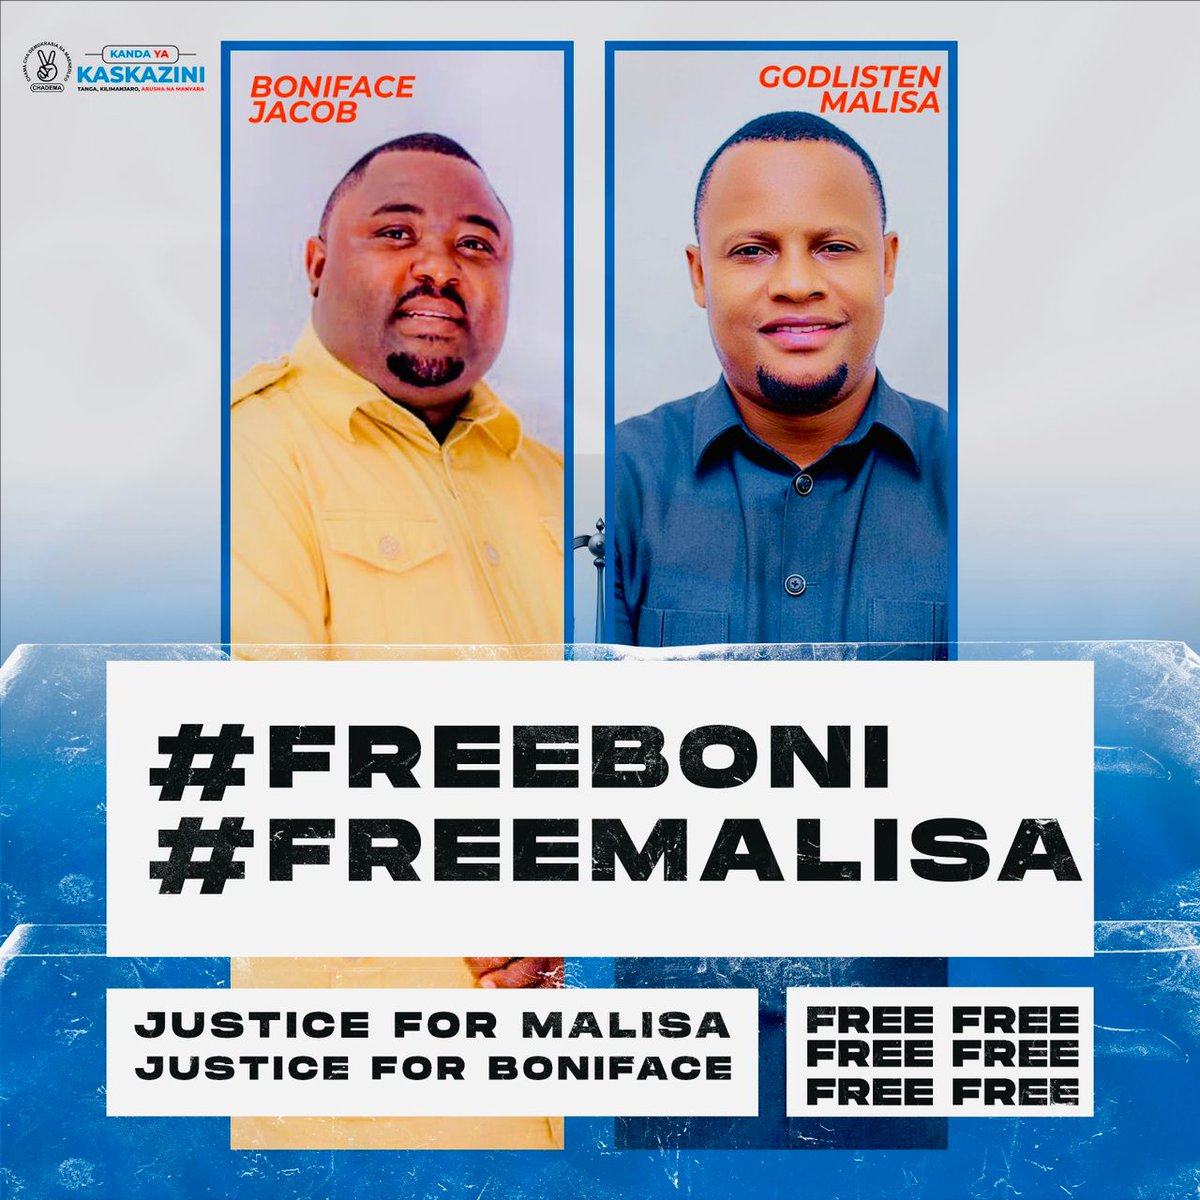 #Freeboni
#FreeMalisa
Justice for Boniface 
Justice for Malisa